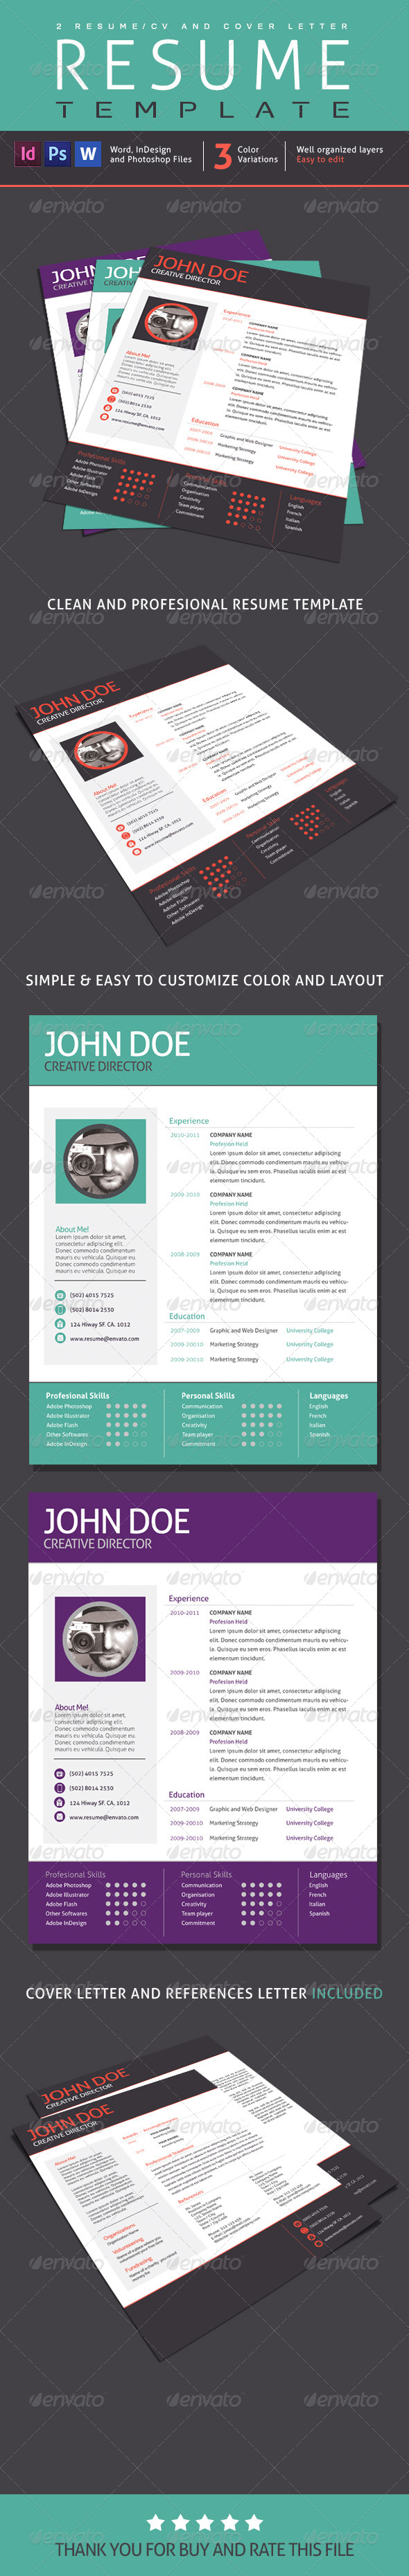 GraphicRiver 2 Resume Designs 1 Cover Letter V01 7662784